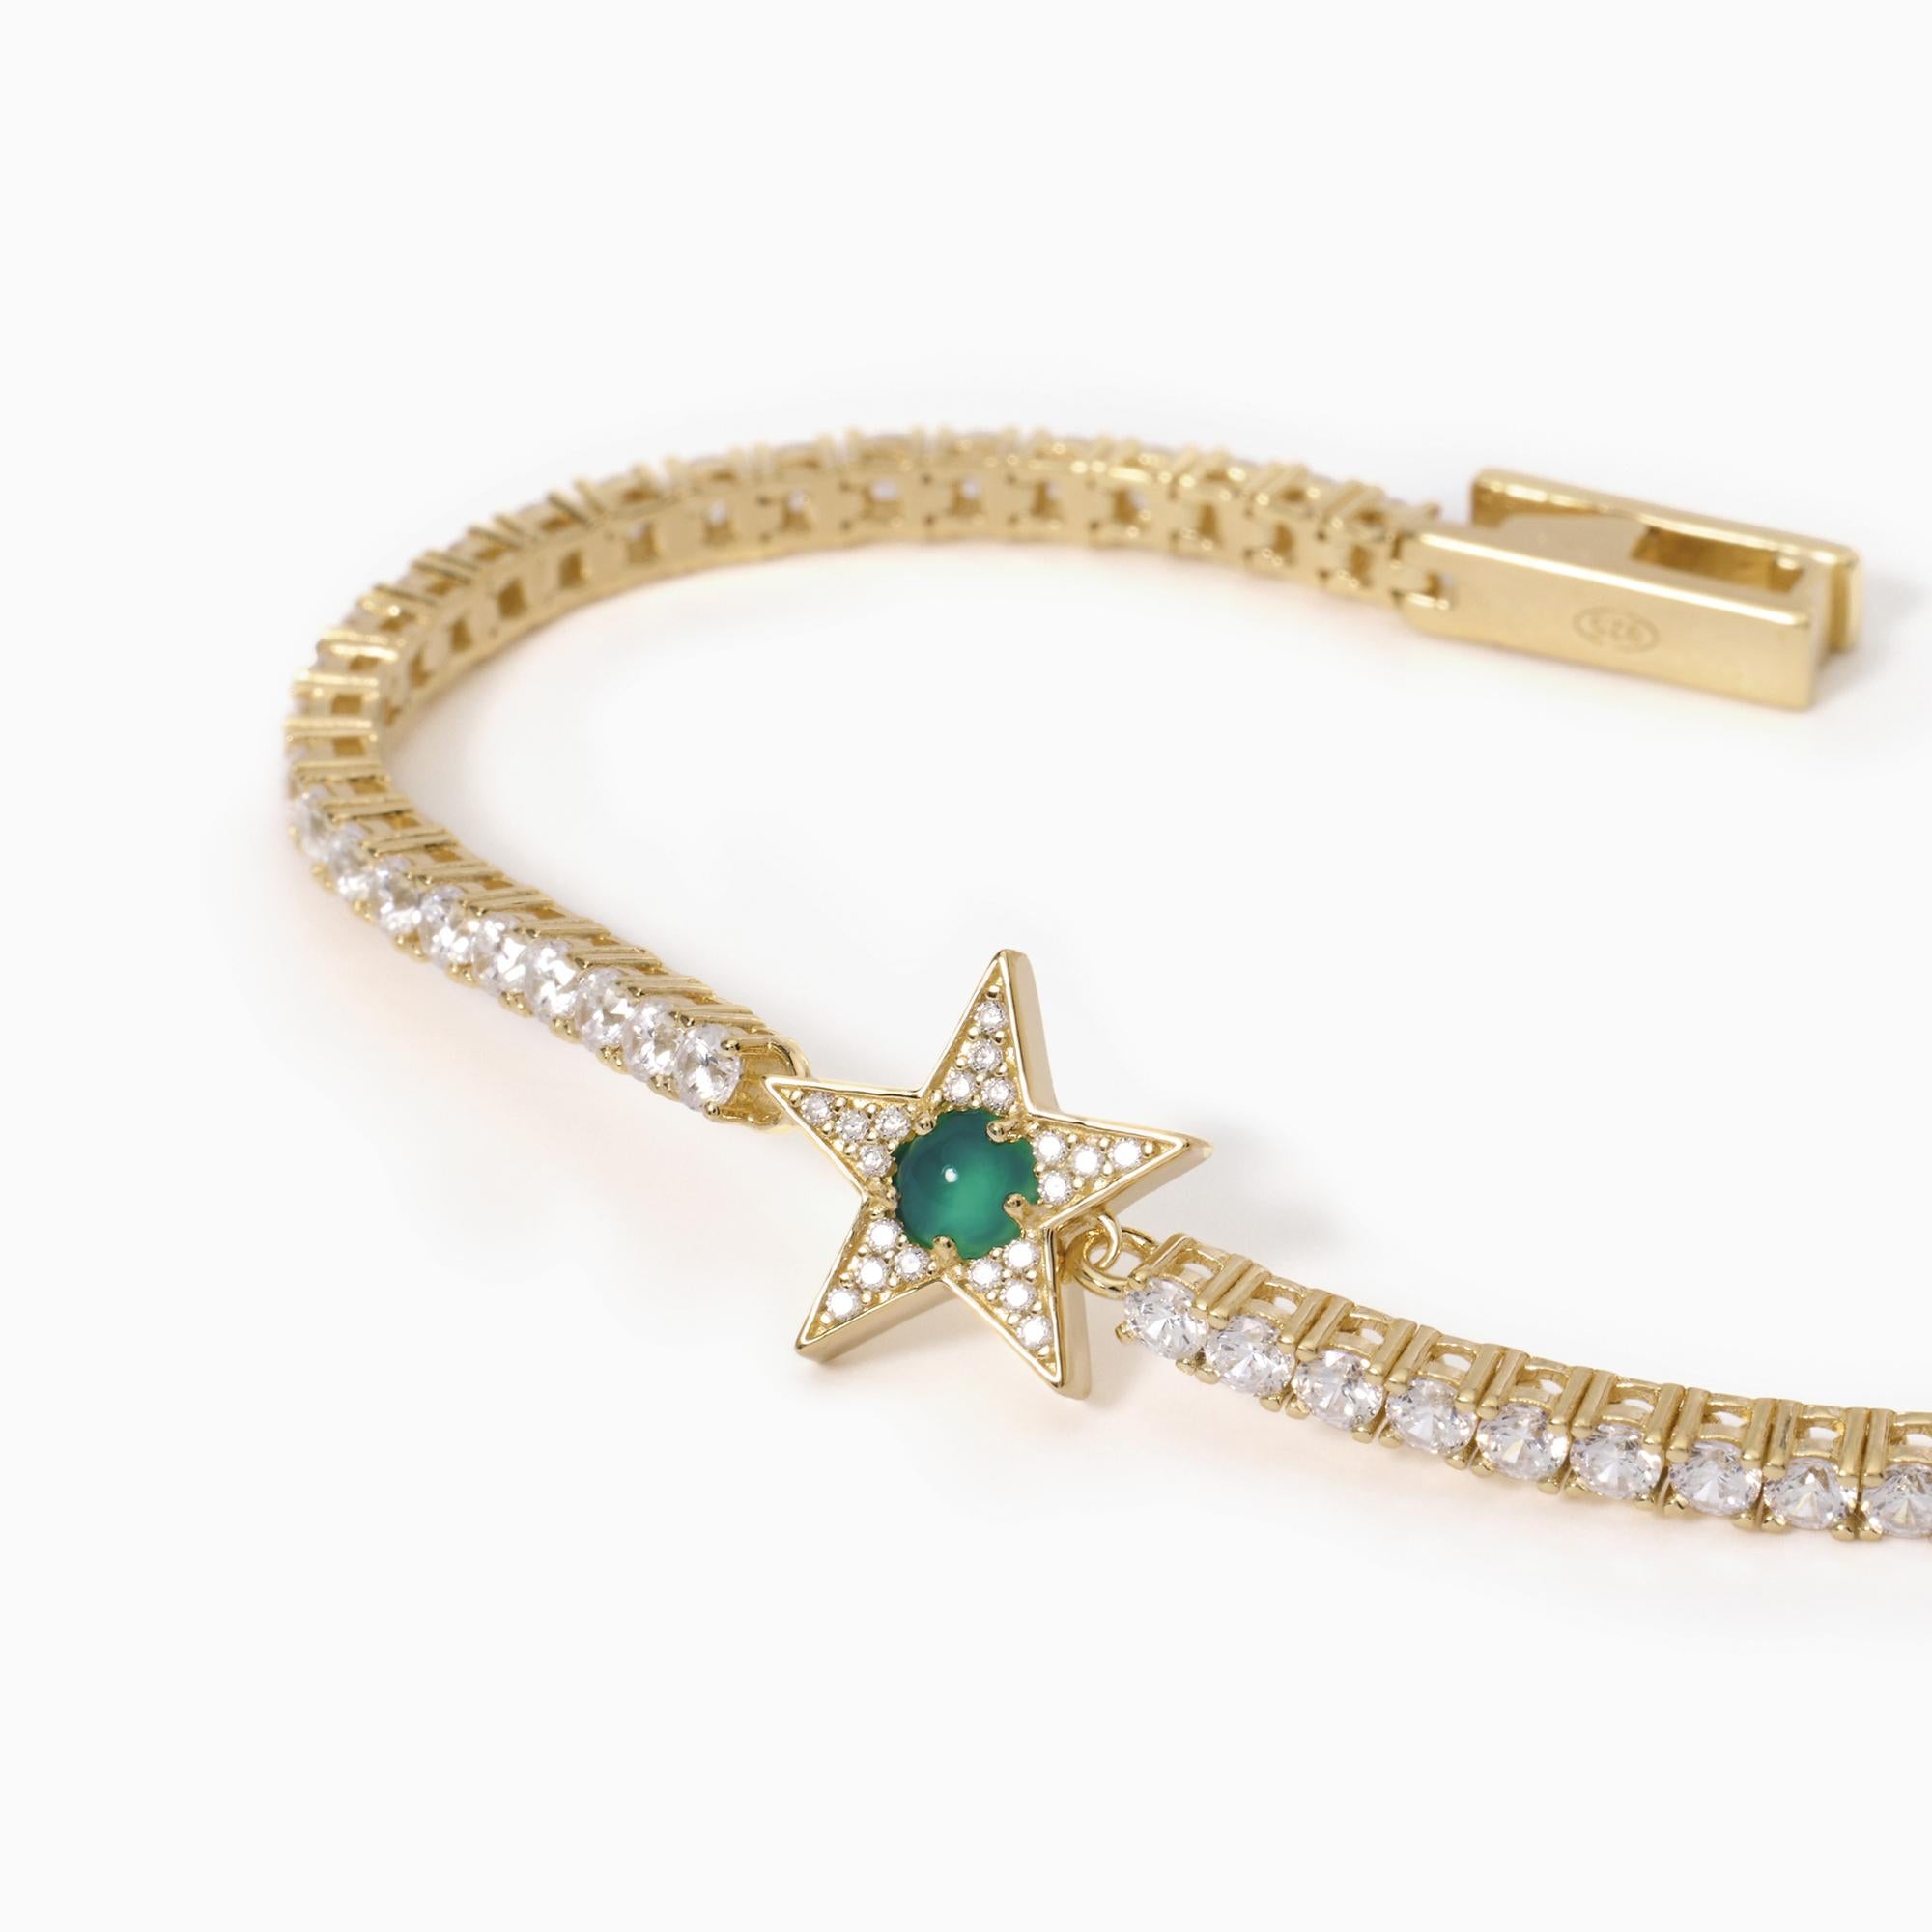 Mabina Femme - Bracelet tennis étoile dorée avec agate verte STARLET - 533651-M